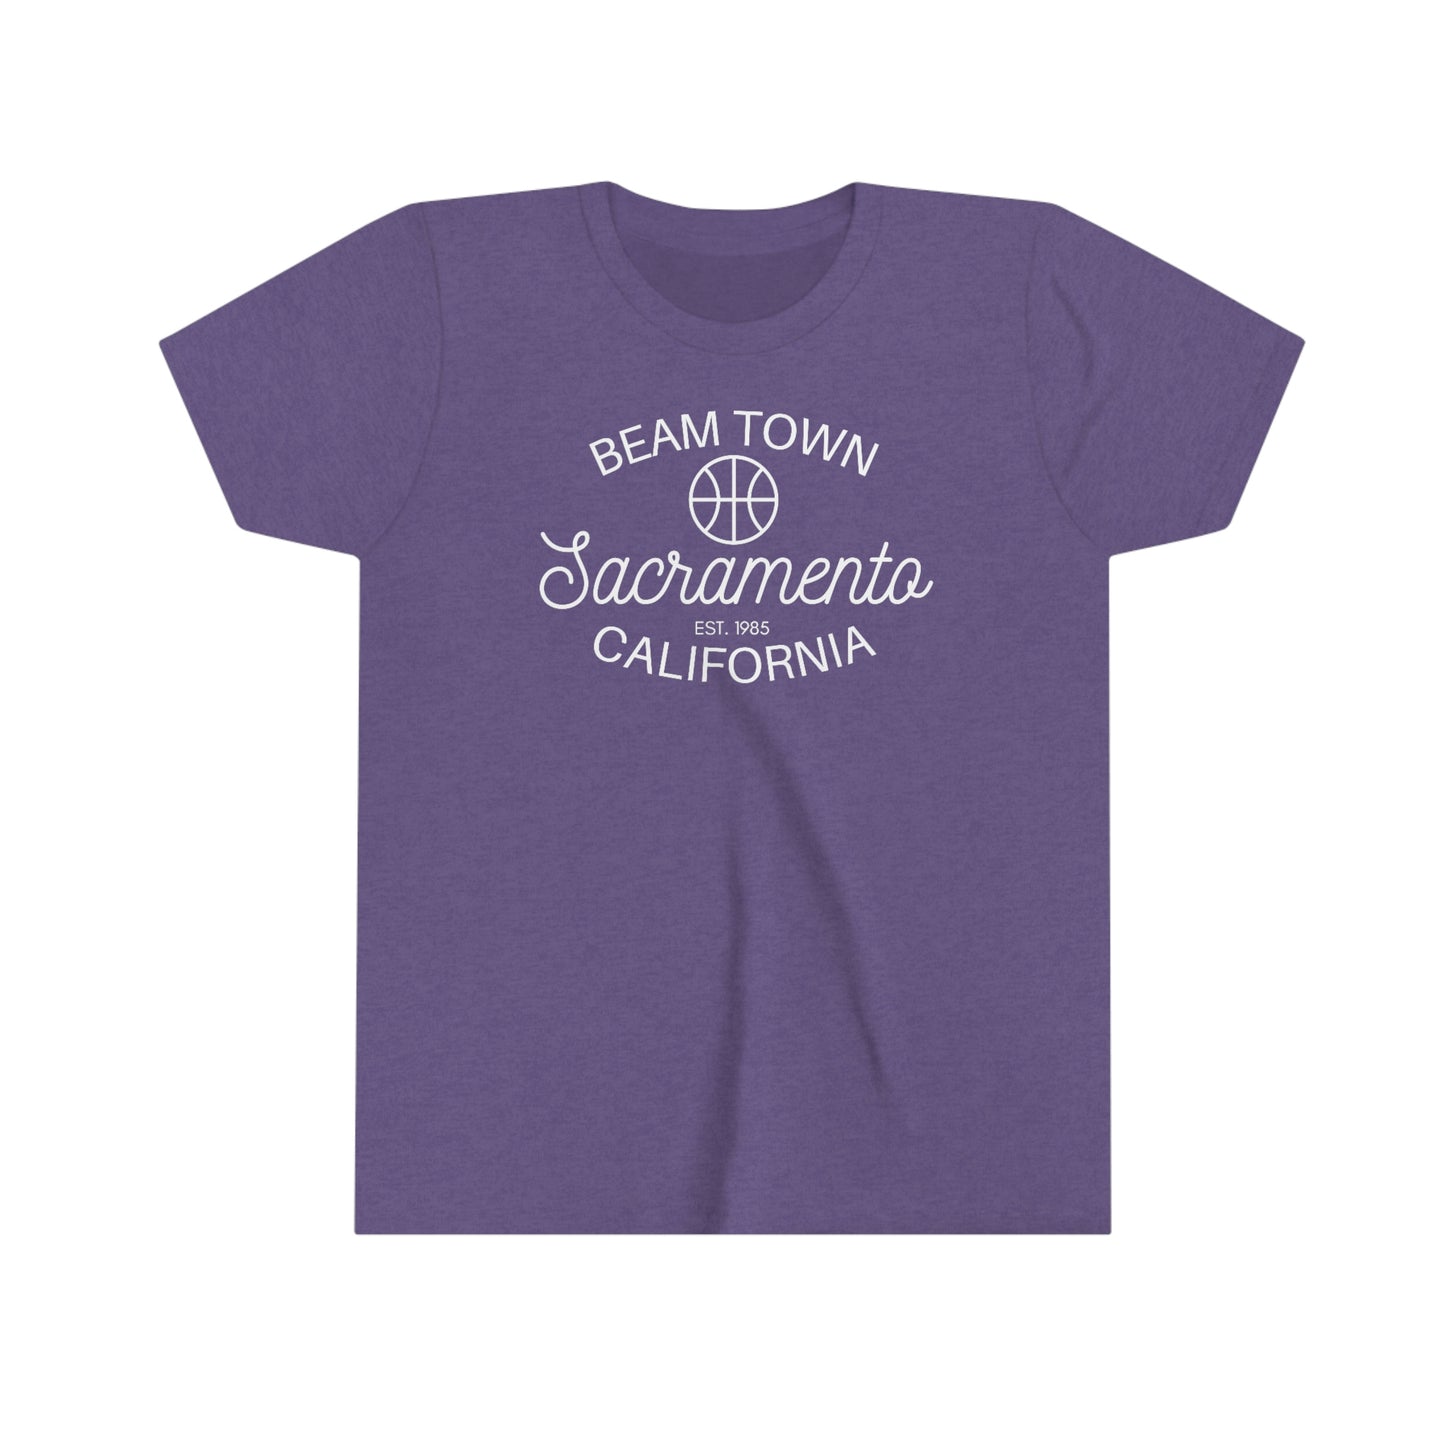 Retro BeamTown Youth T-Shirt, Sacramento Basketball, Kids Youth Unisex Tee, Sac Basketball Gift Kids Fan Gift, Light the Beam Shirt, Vintage Vibe, Retro Style Tee Shirt, Heather Purple Shirt